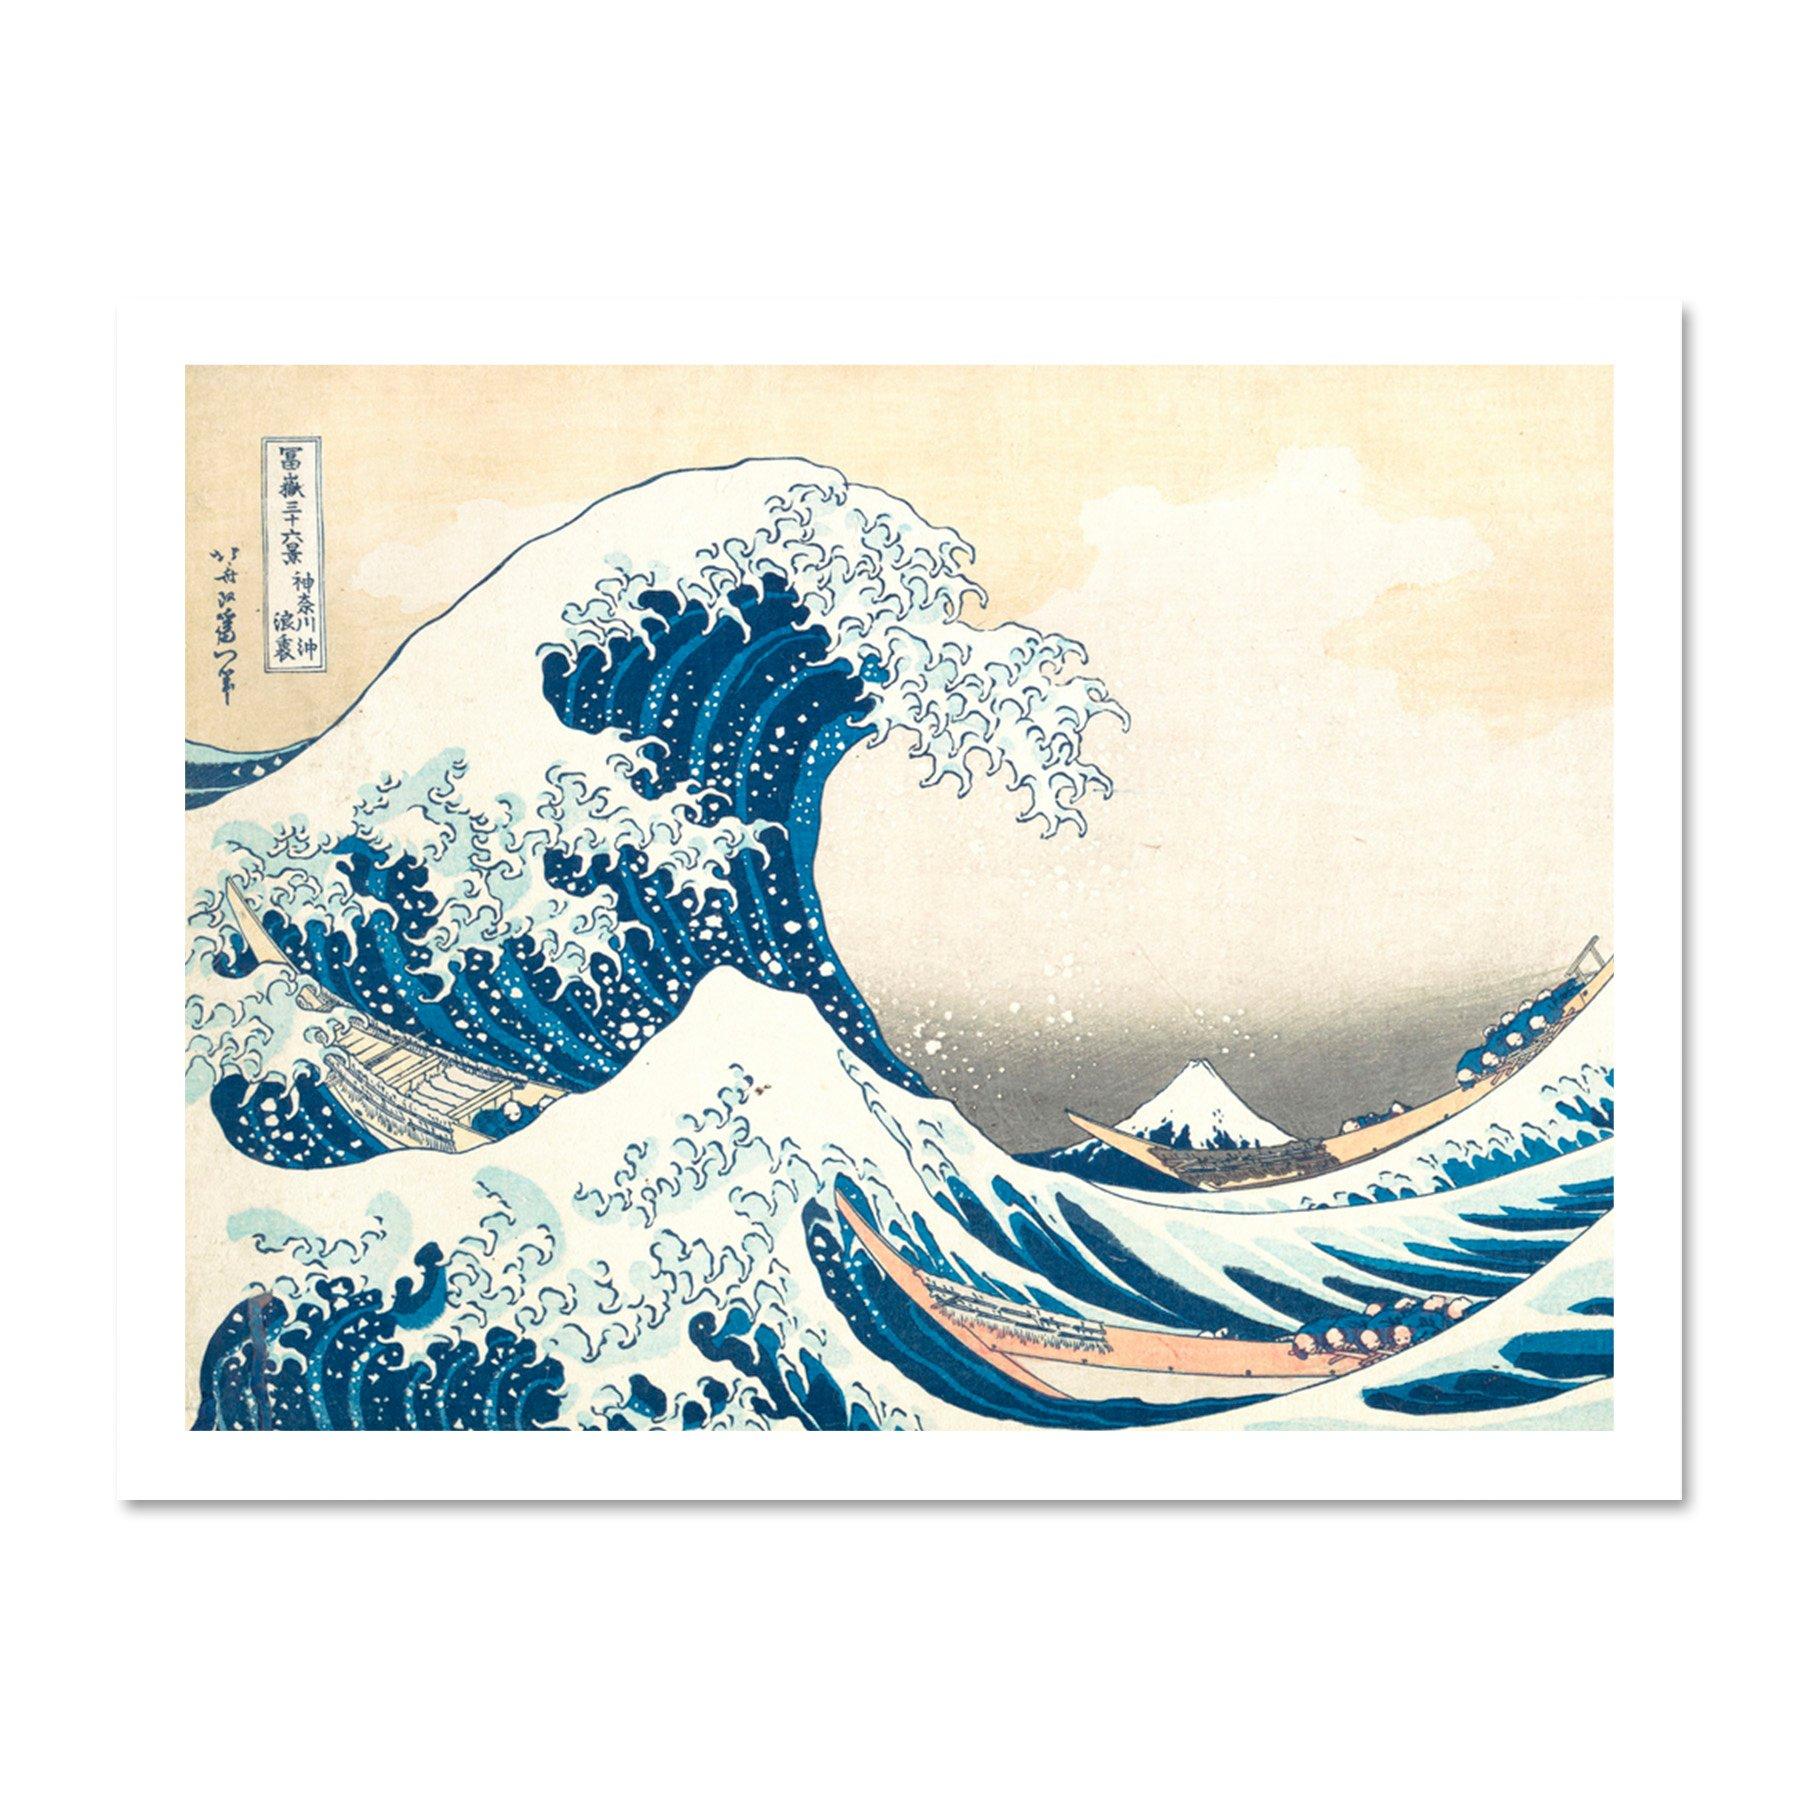 Hokusai Great Wave Off Kanagawa Large Framed Art Print Poster Wall Decor 18x24 inch